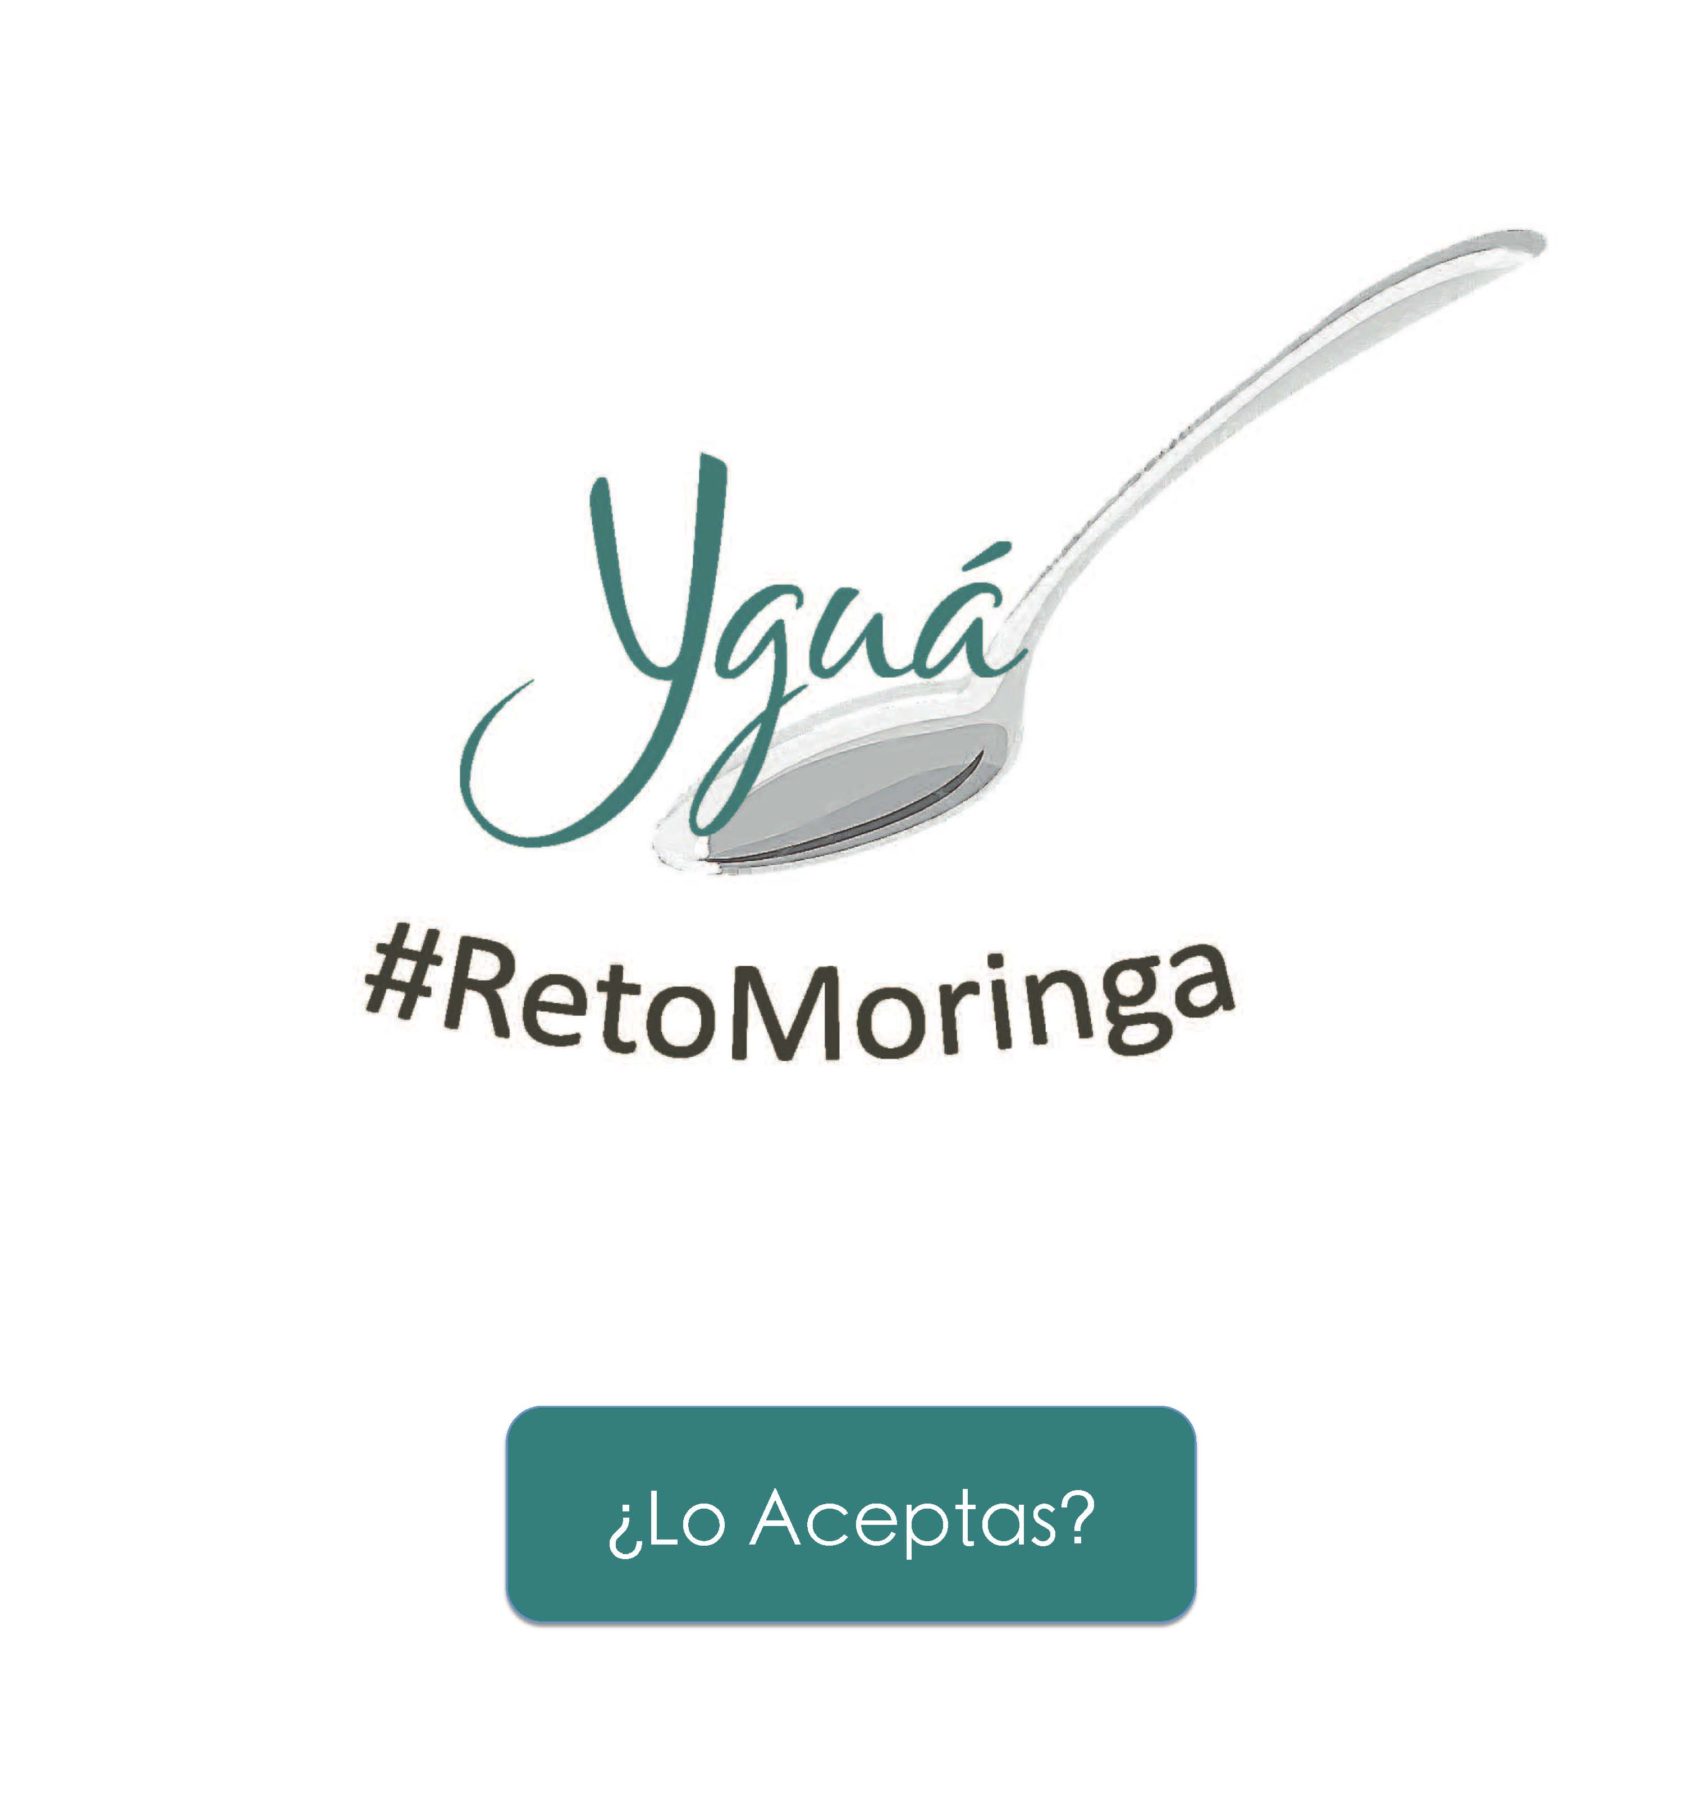 (c) Yguamoringa.com